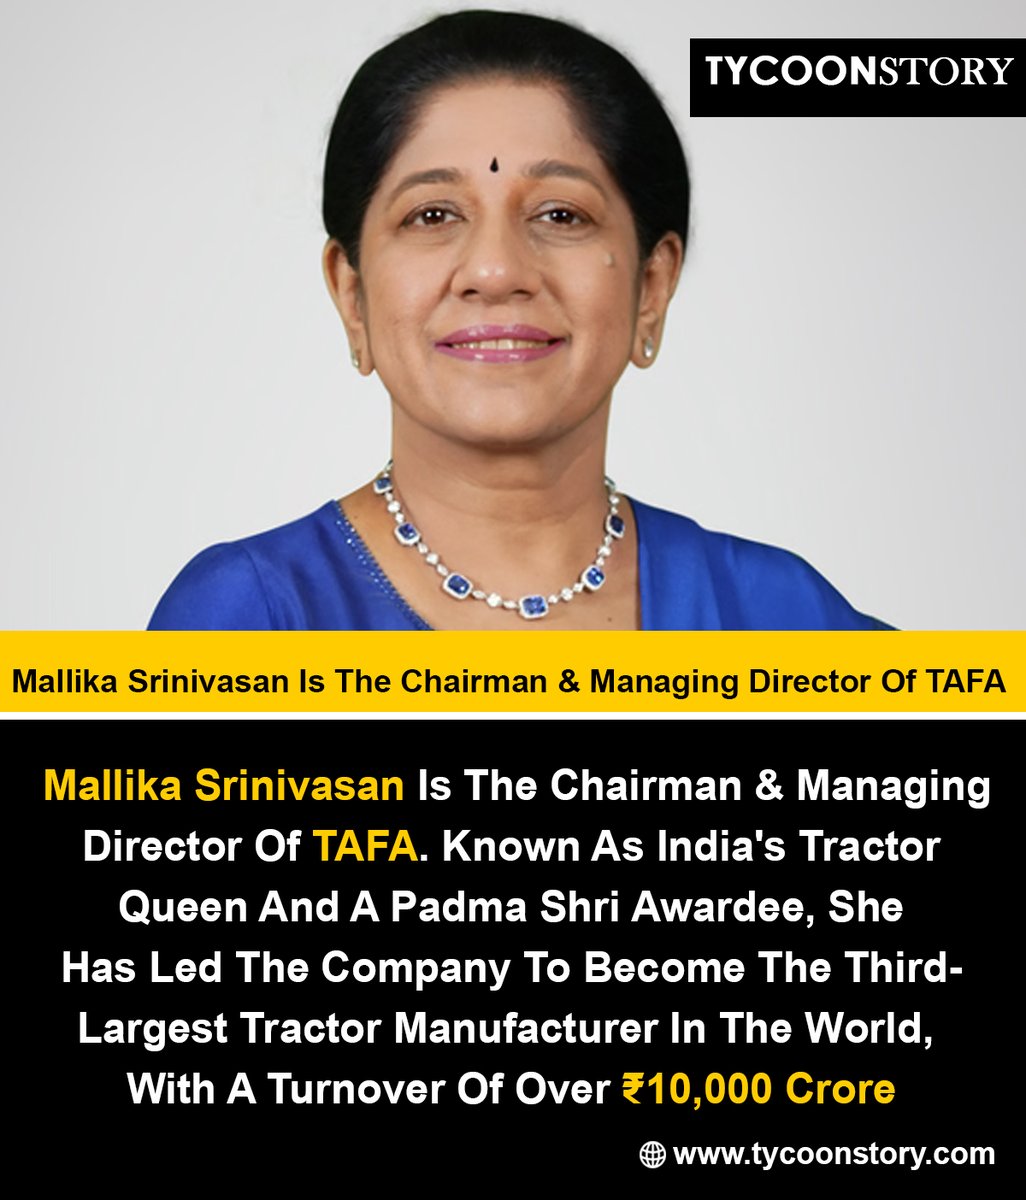 Mallika Srinivasan Is The Chairman & Managing Director Of TAFA

#MallikaSrinivasan #TAFAChairman #TAFA
#WomenLeaders #Leadership #CorporateIndia
#BusinessLeaders #IndianBusiness #ManagingDirector
#WomenEmpowerment 

tycoonstory.com